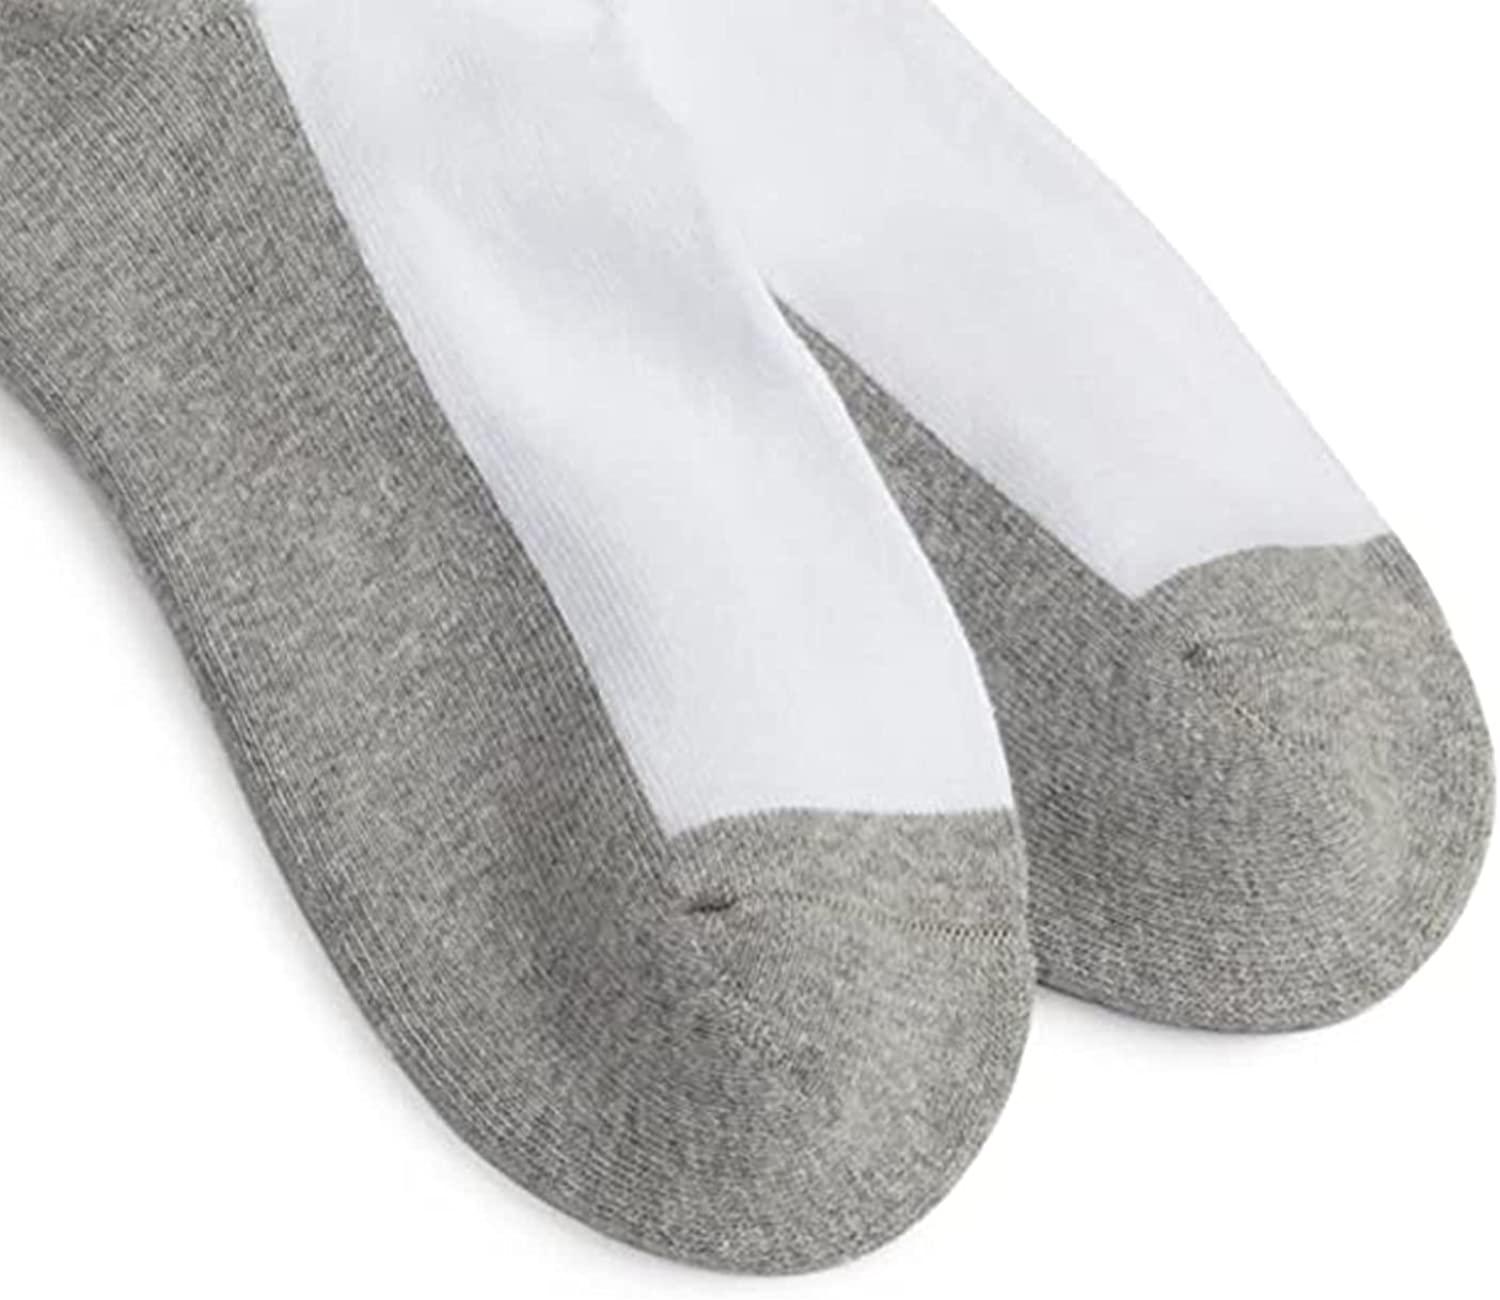 Jefferies Socks Big Boys' Seamless-Toe Quarter Athletic Socks (Pack of 6)  Medium White/Grey